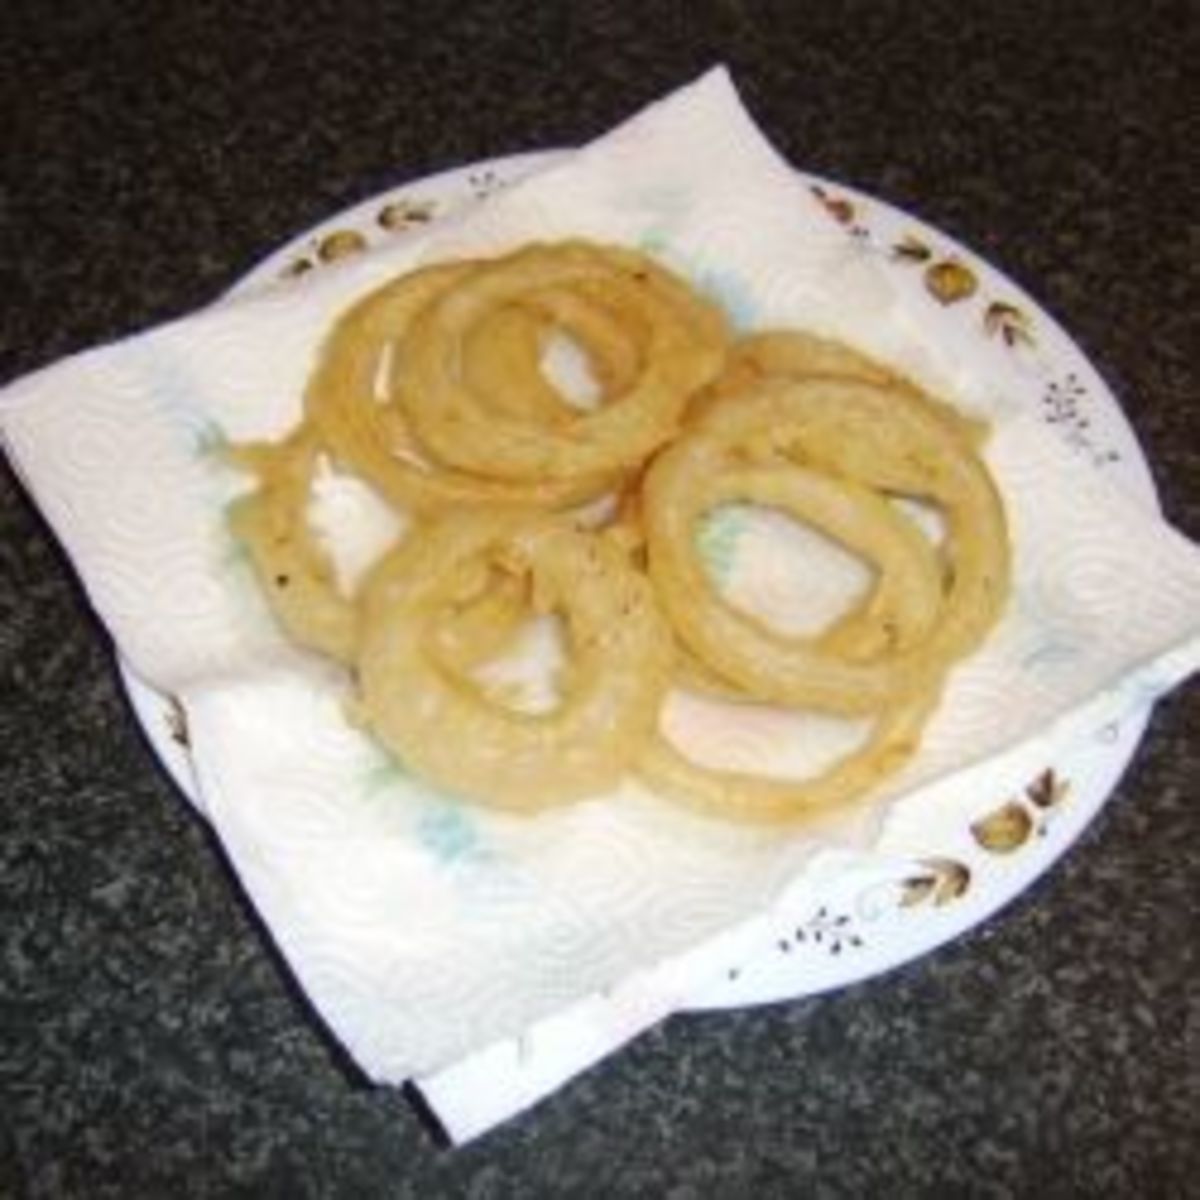 How to Make Homemade Onion Rings